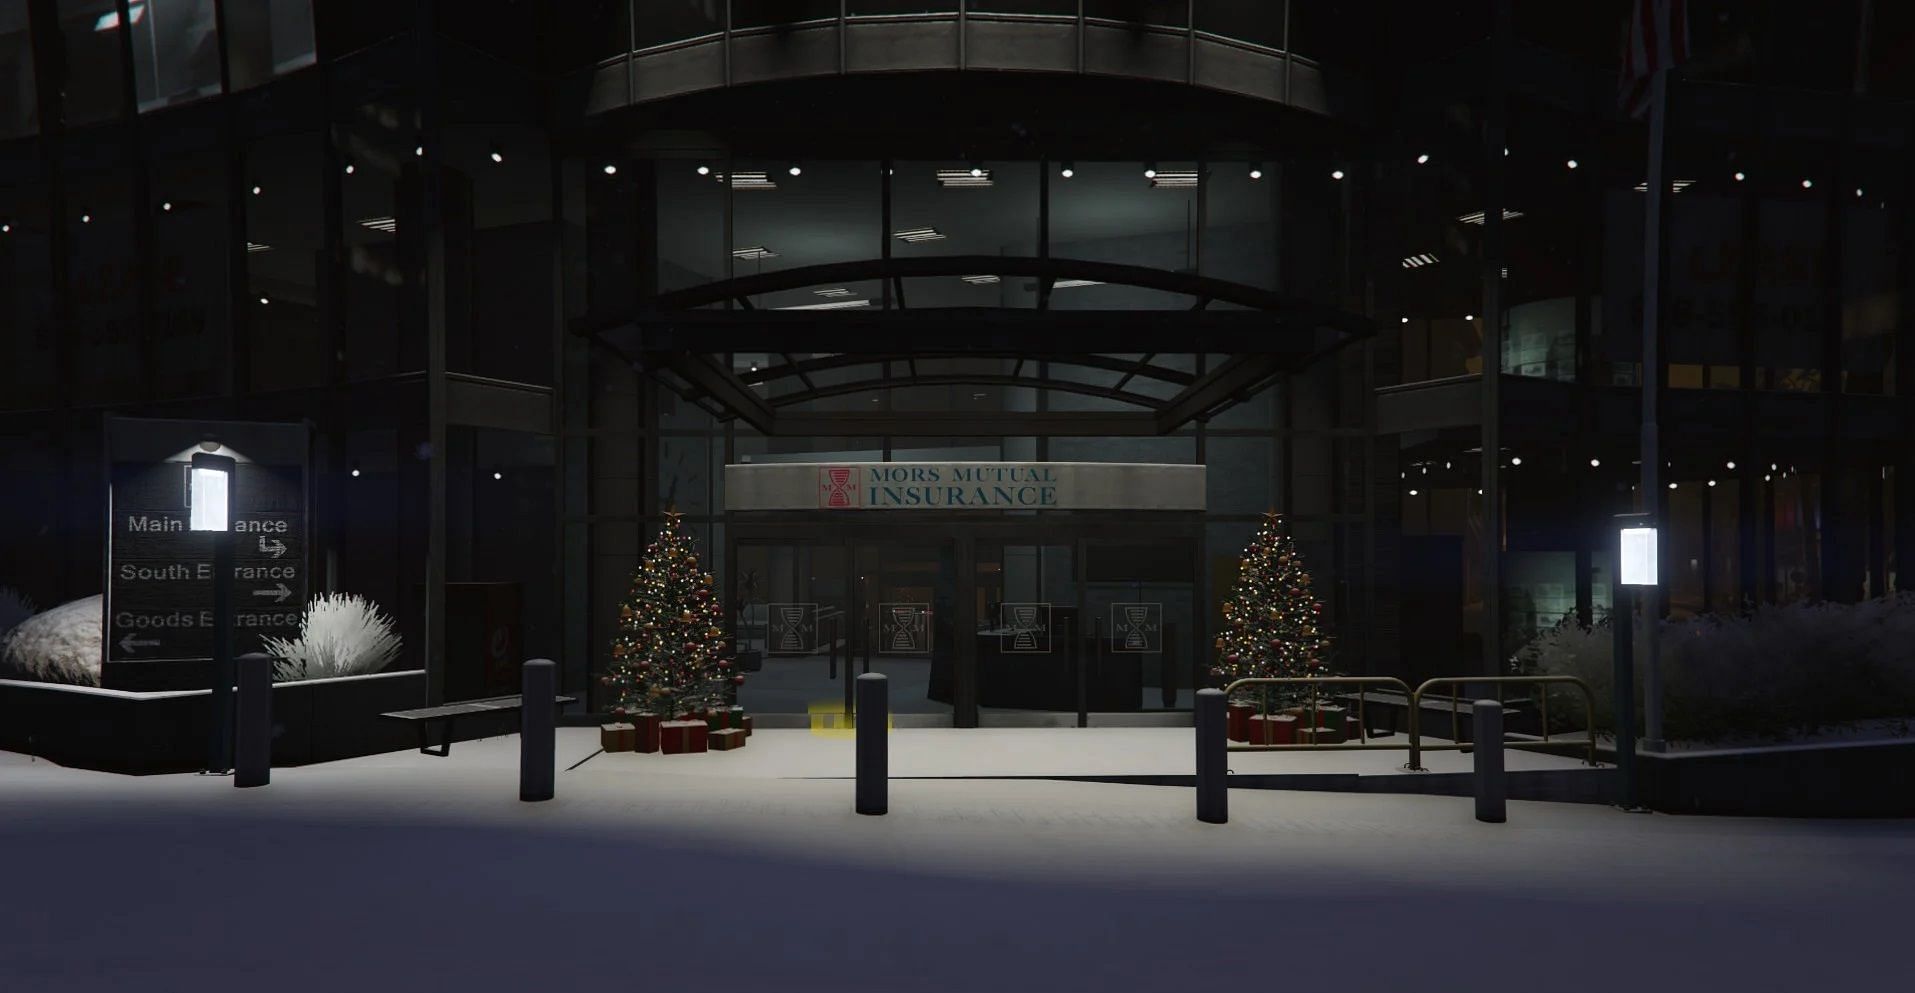 Mors Mutual Insurance HQ (Image via Rockstar Games)